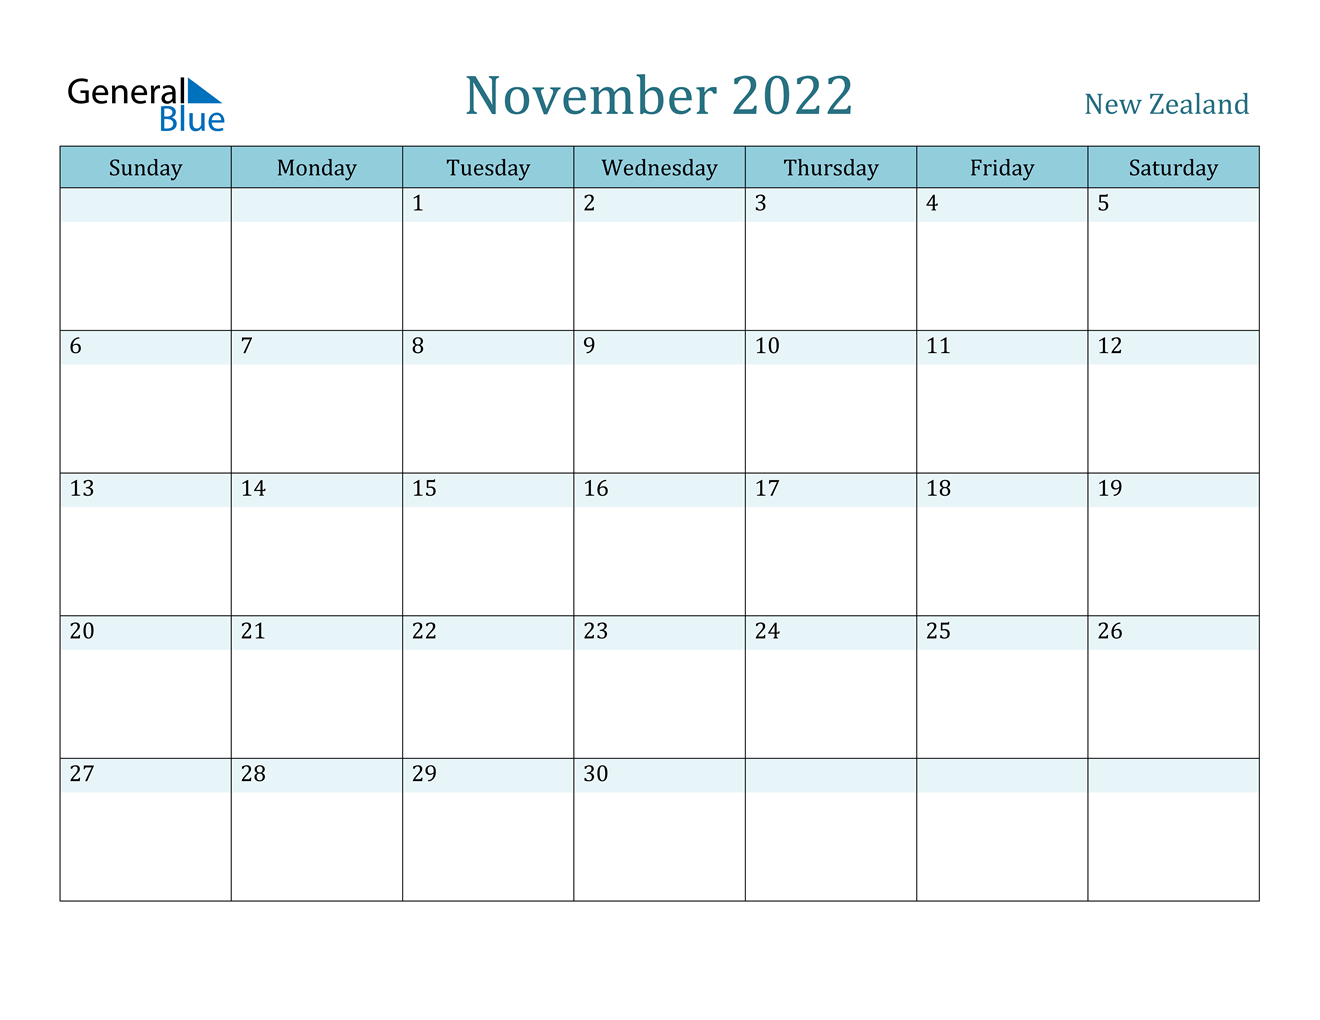 November 2022 Calendar - New Zealand